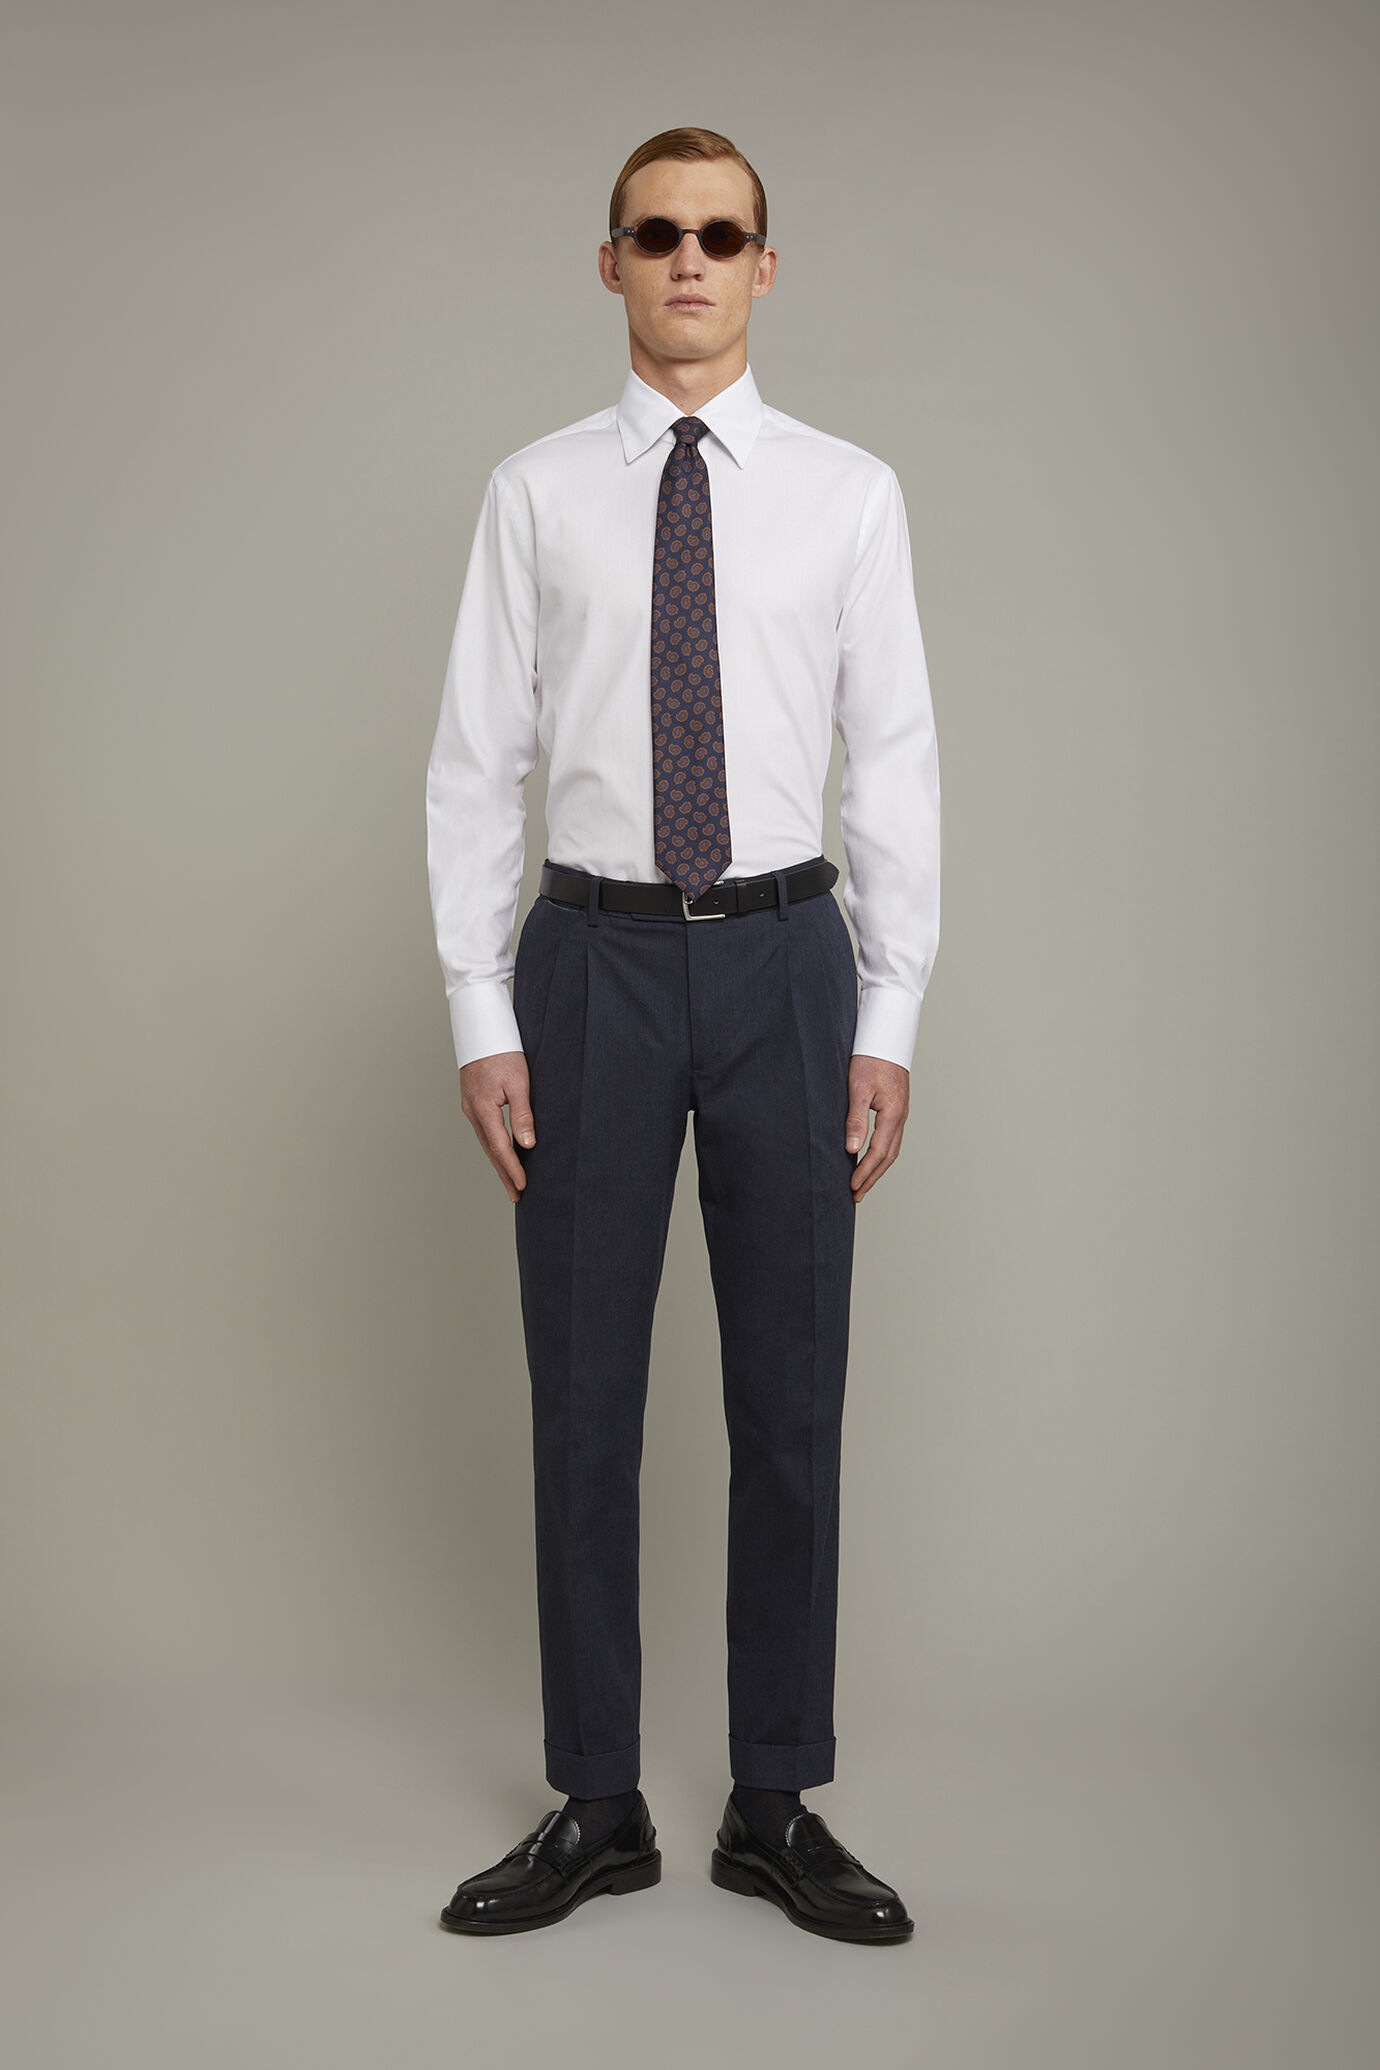 Men's shirt classic collar 100% cotton herringbone fabric plain regular fit image number 0